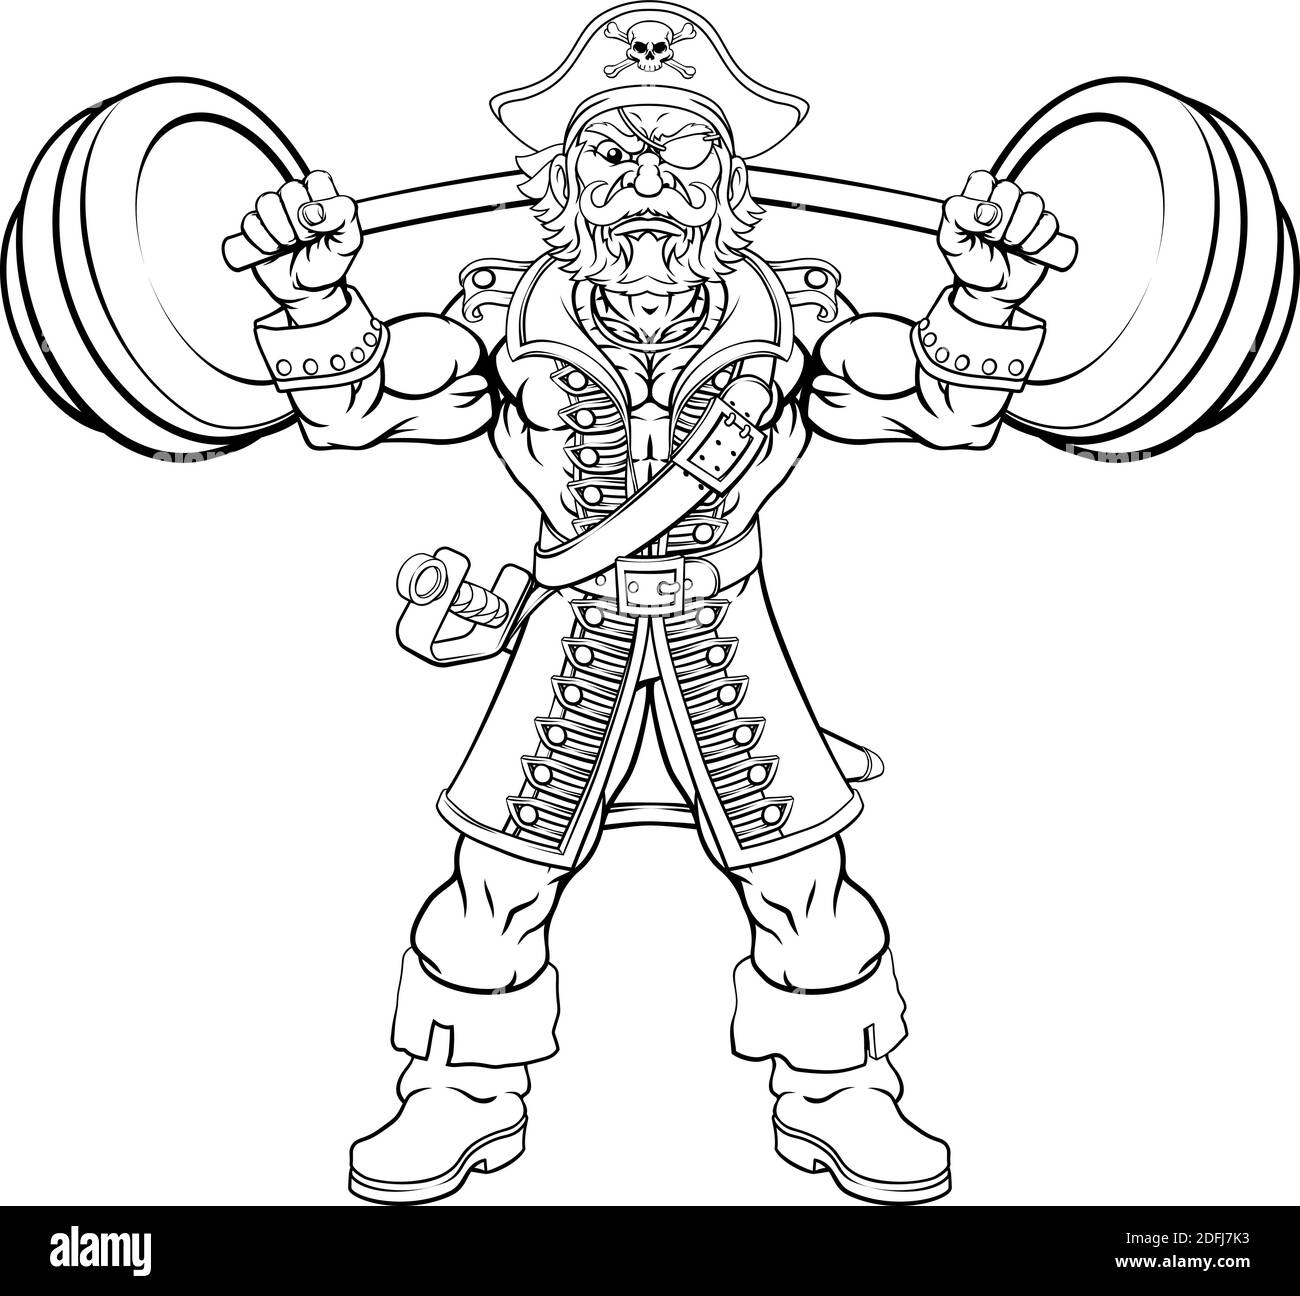 Pirate Weight Lifting Barbell Cartoon Mascot Stock Vector